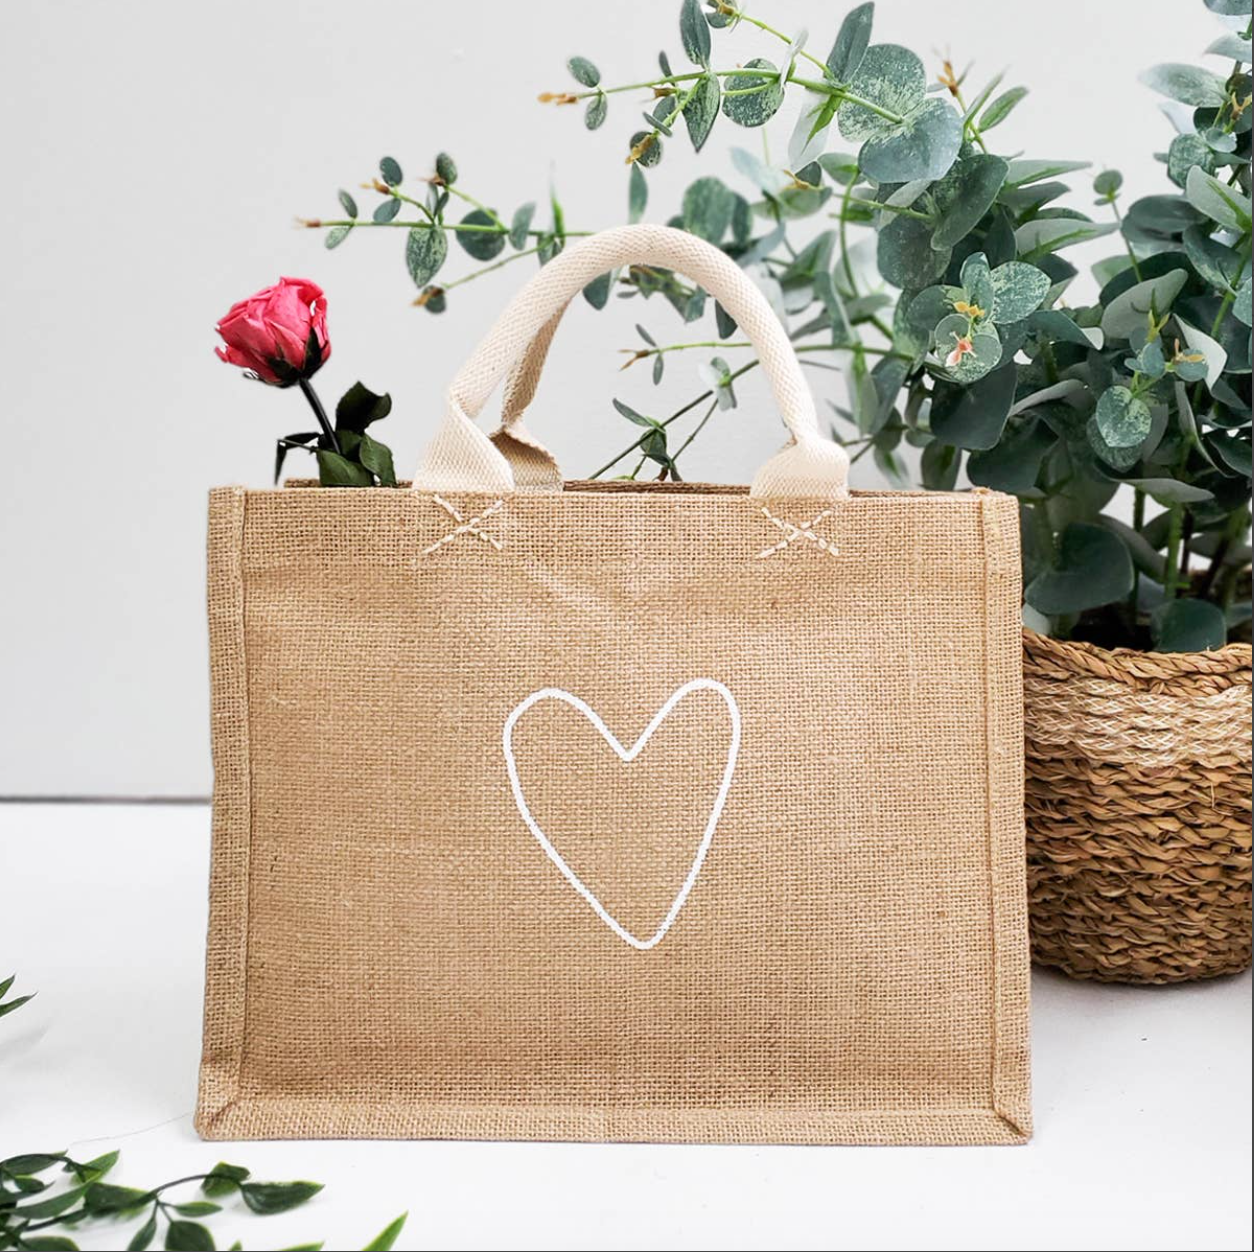 Love Gift Bag